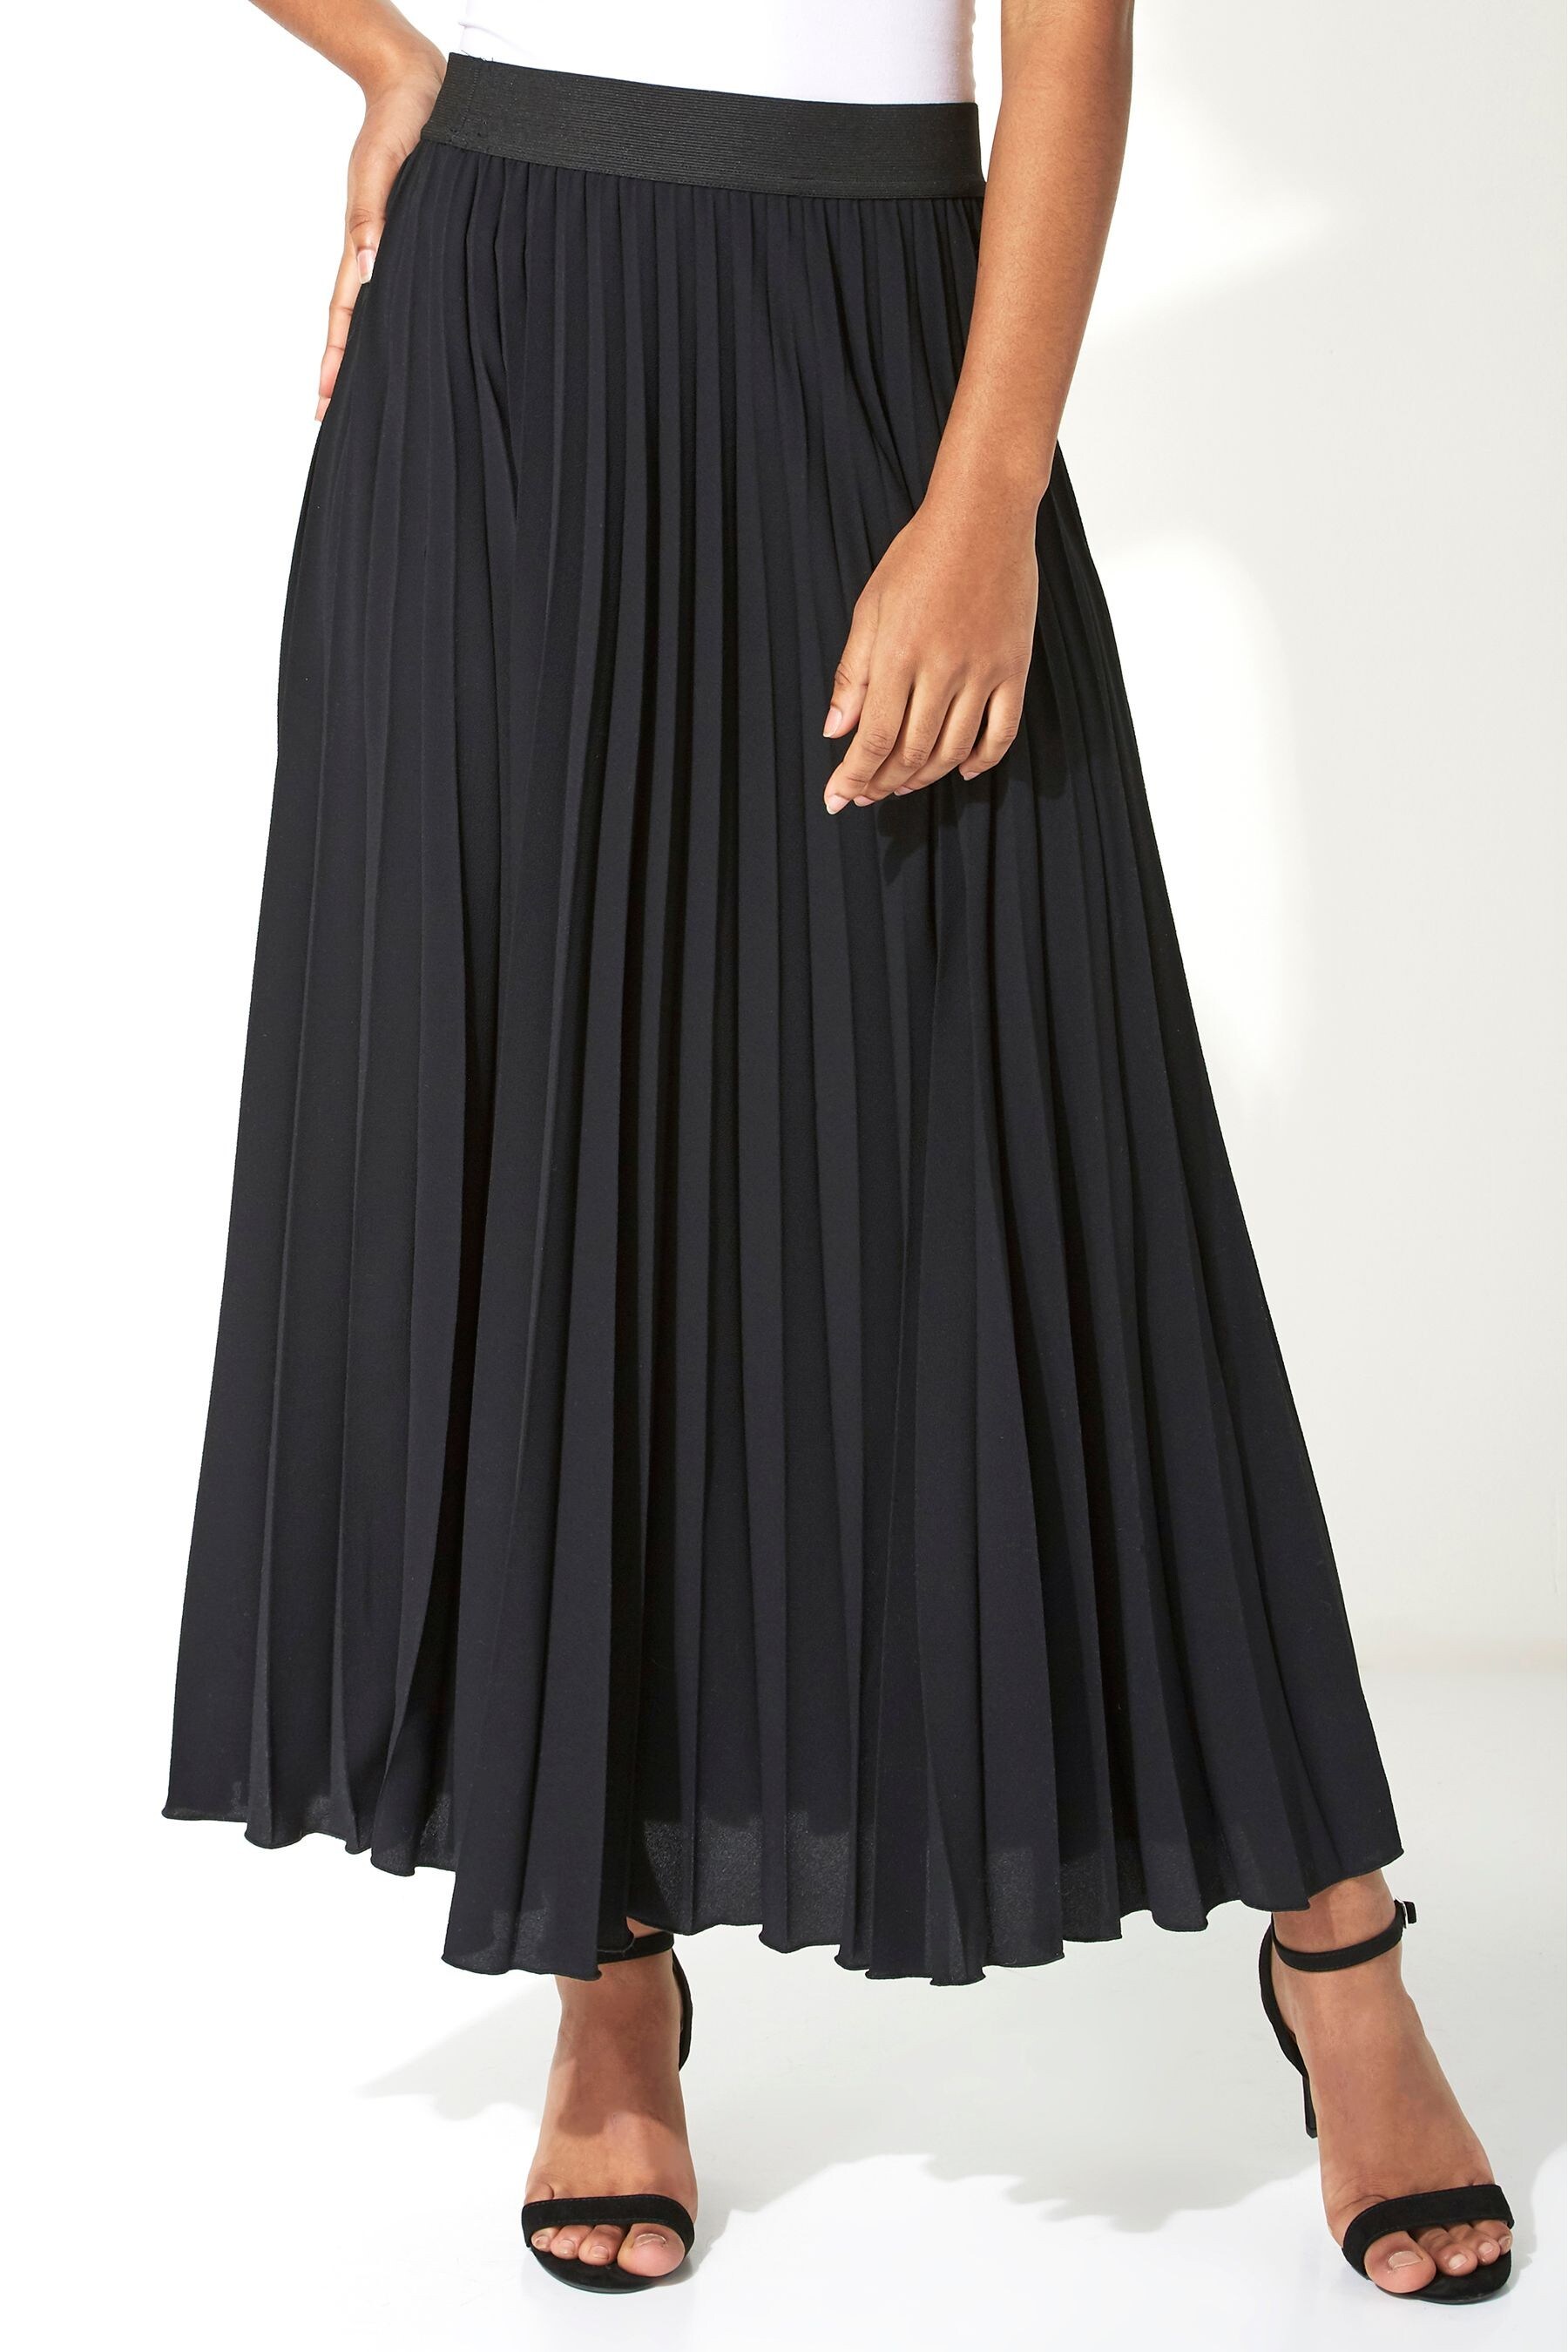 ASOS DESIGN pleated maxi skirt in black  ASOS